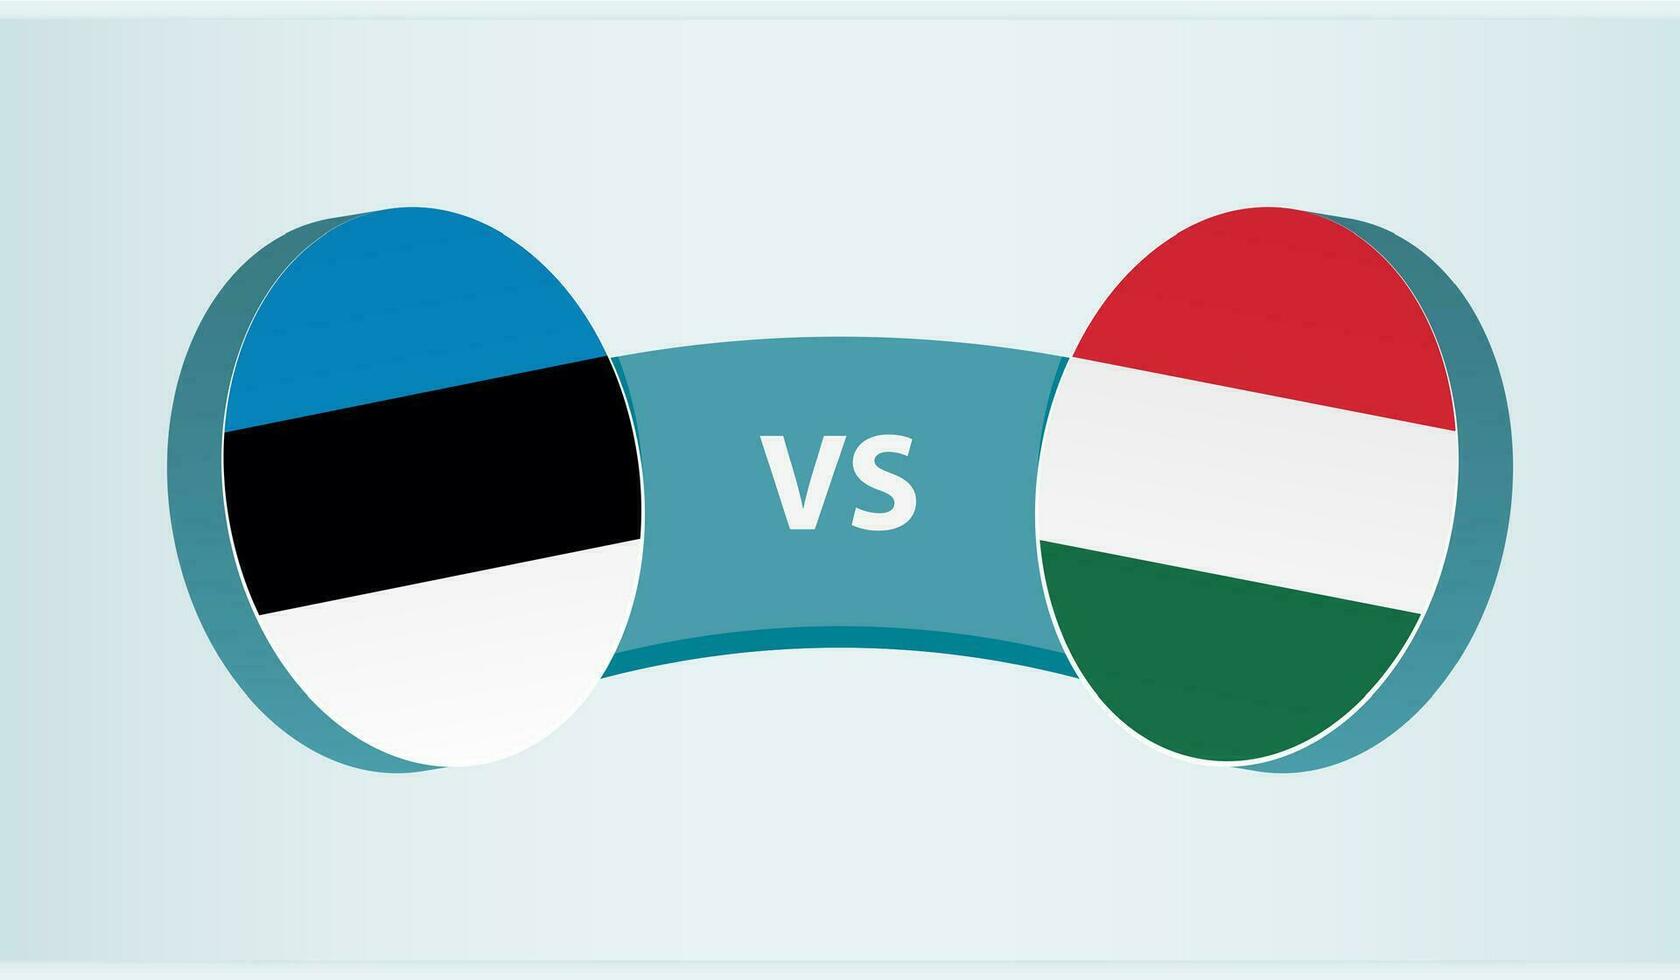 Estonia versus Hungary, team sports competition concept. vector